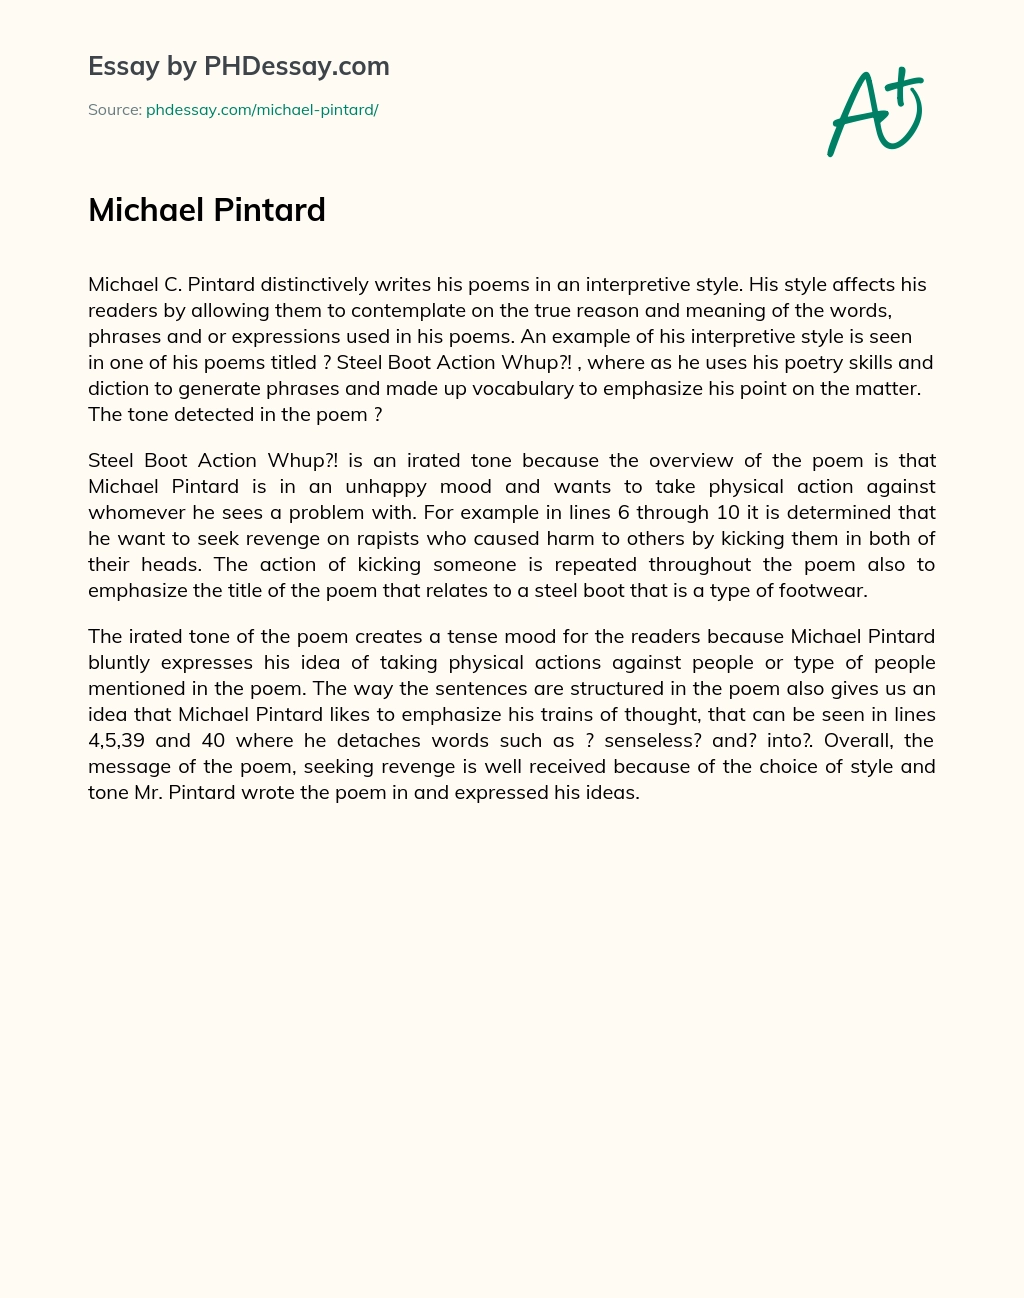 Michael Pintard essay